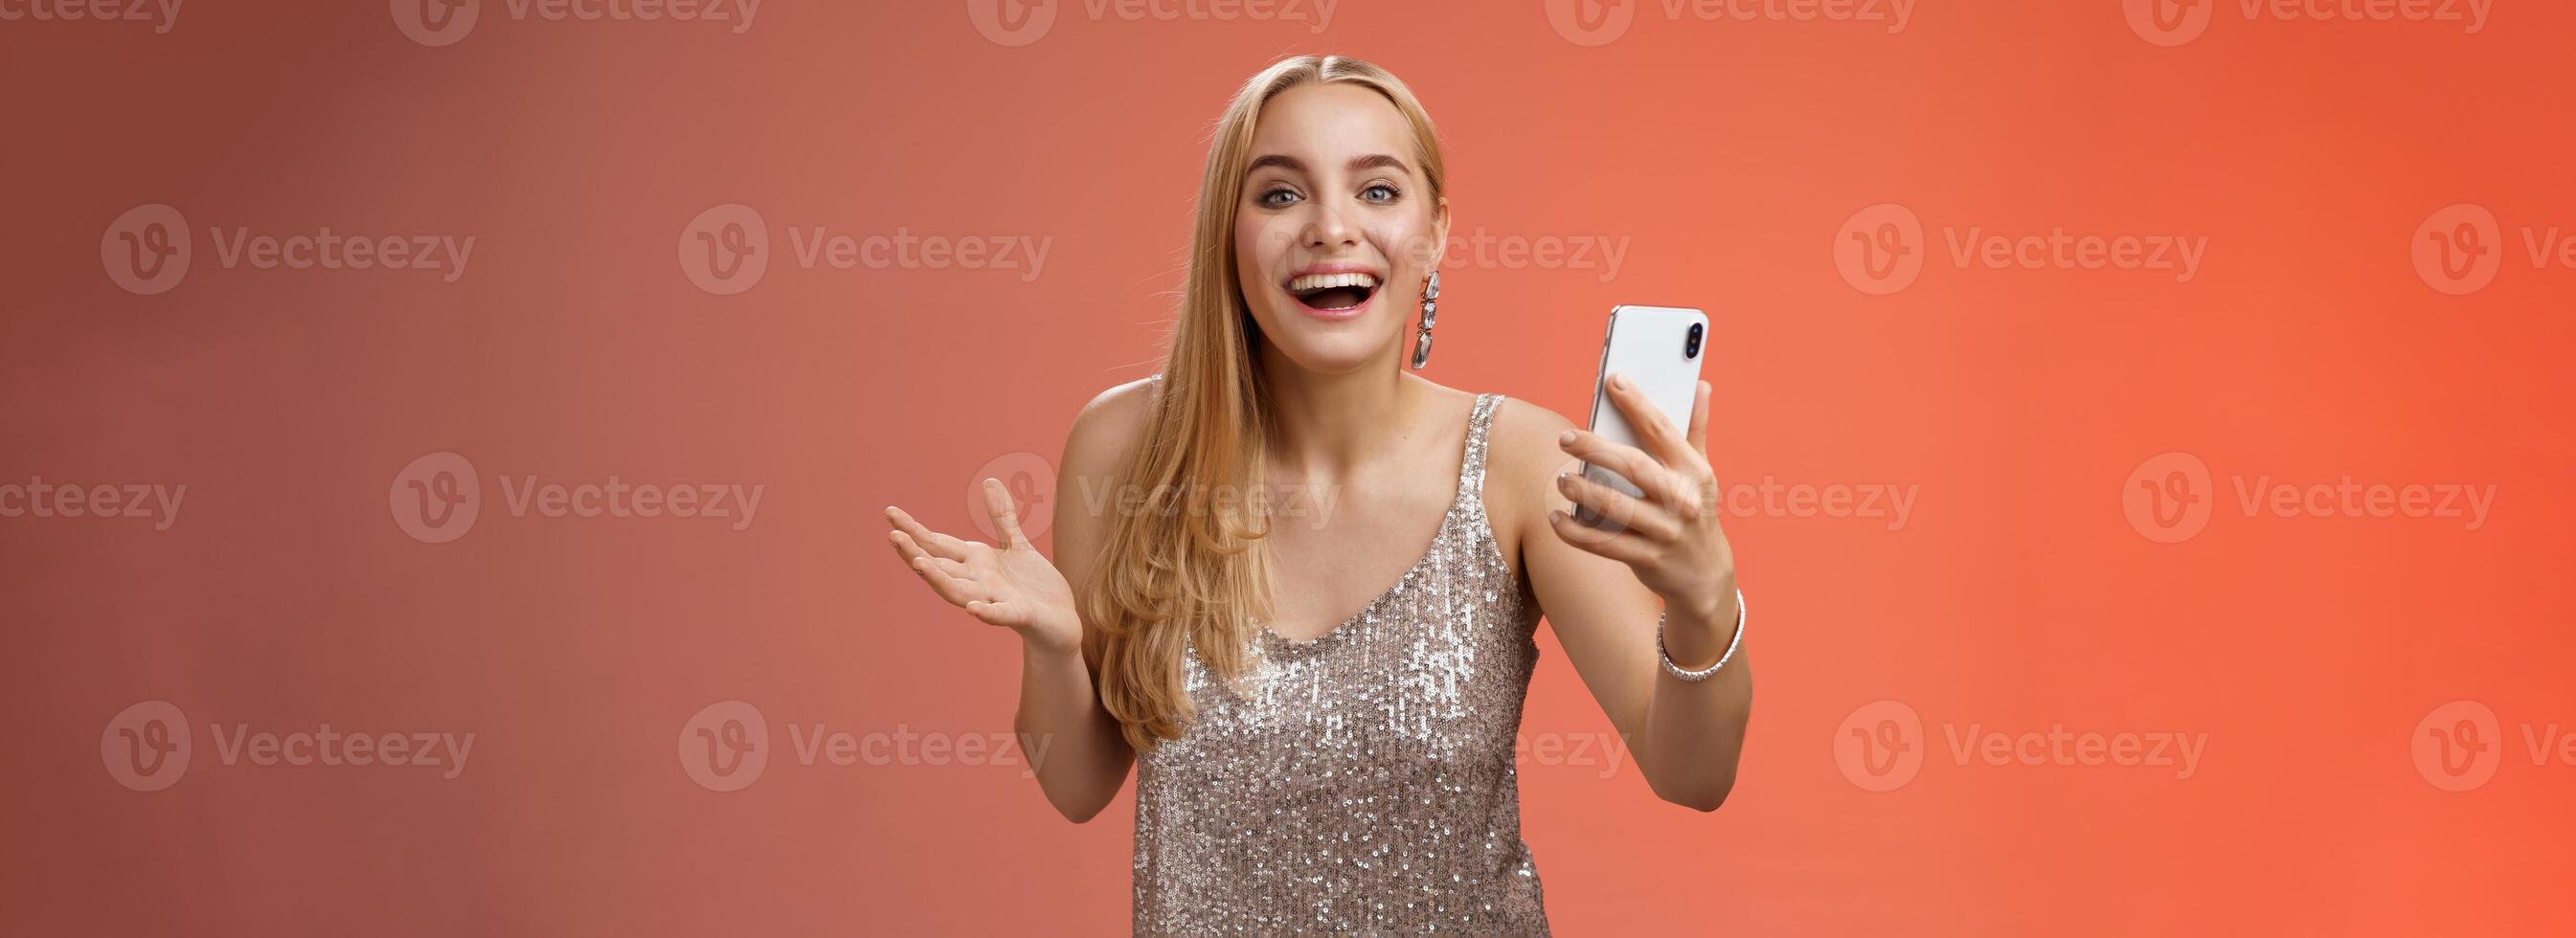 verbaasd gelukkig charmant blond meisje in zilver glinsterende elegant jurk Holding smartphone versteld staan leuk vinden geweldig resultaat Bewerk foto app glimlachen vroeg me af geamuseerd, staand rood achtergrond